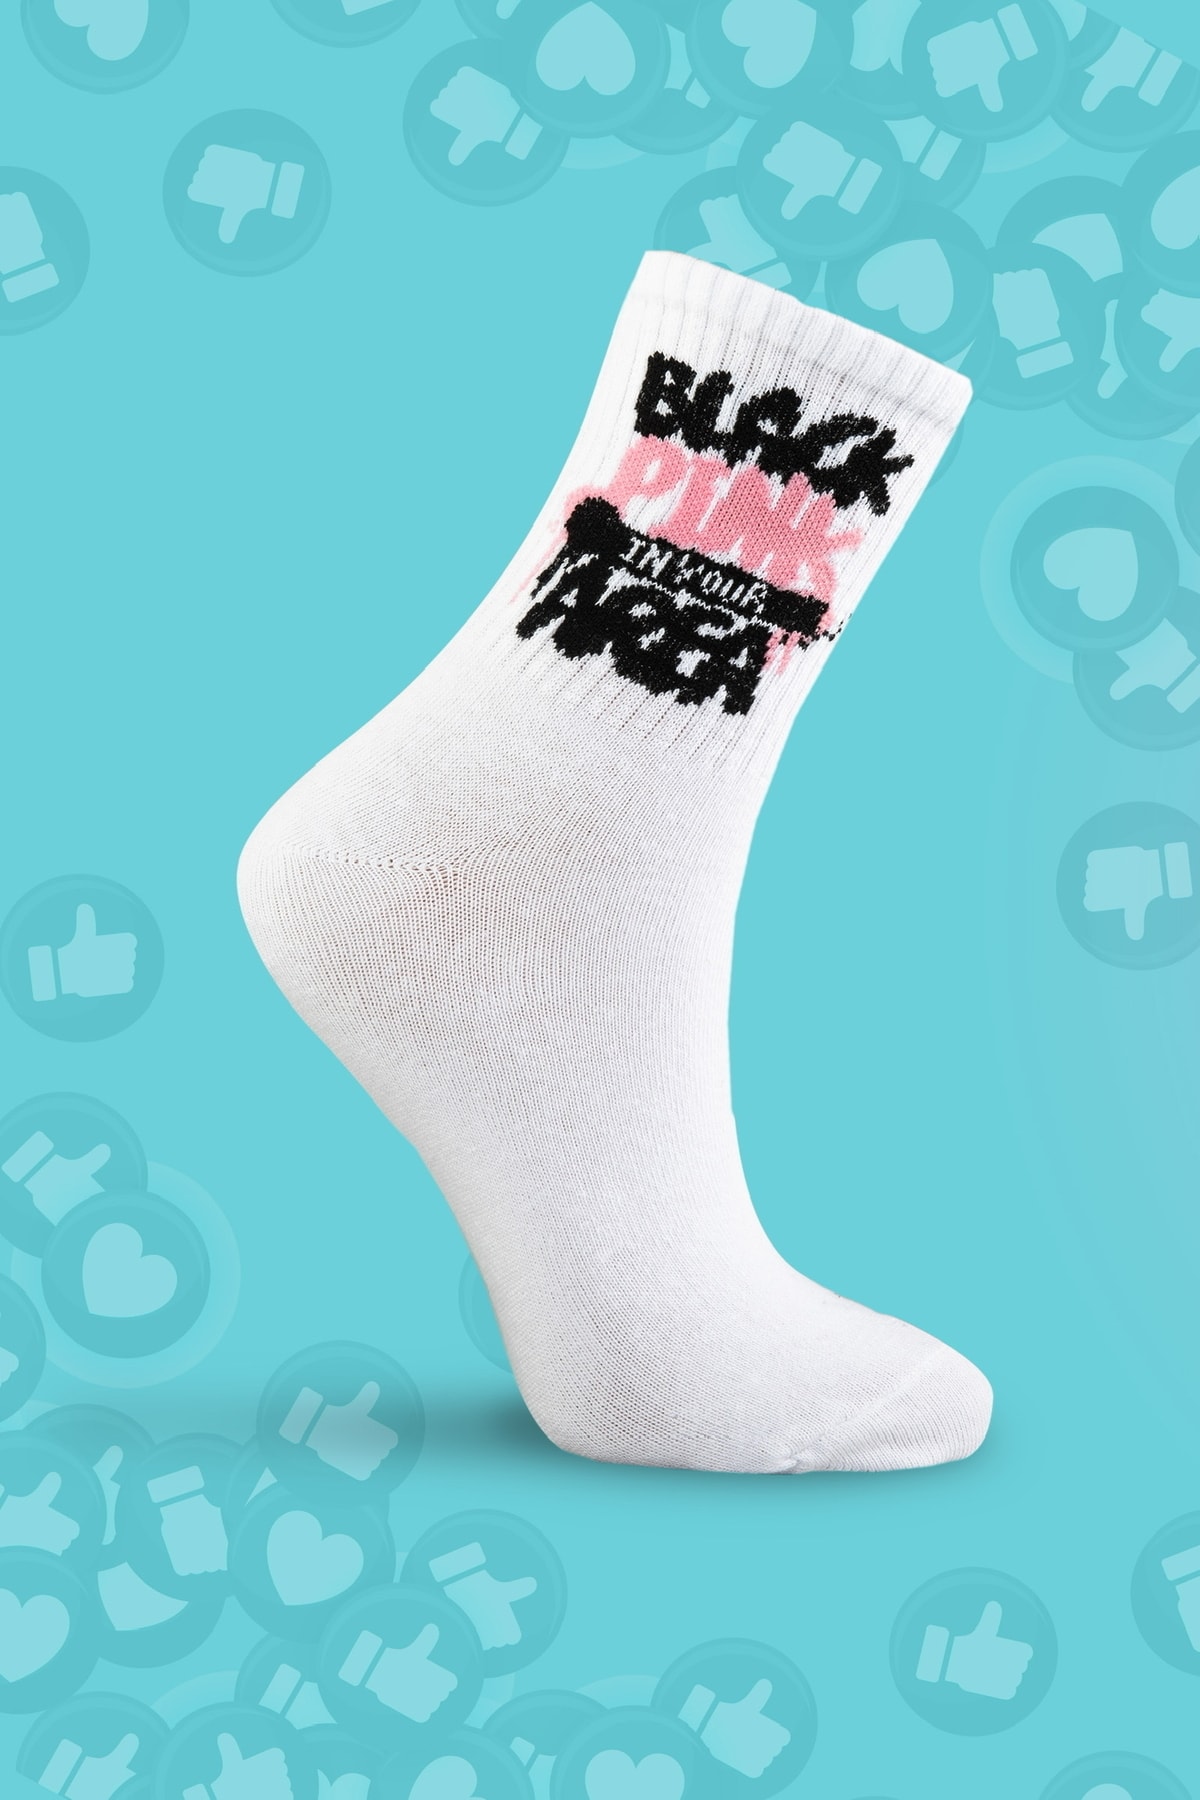 crazy Llama's Black Pink Çorap